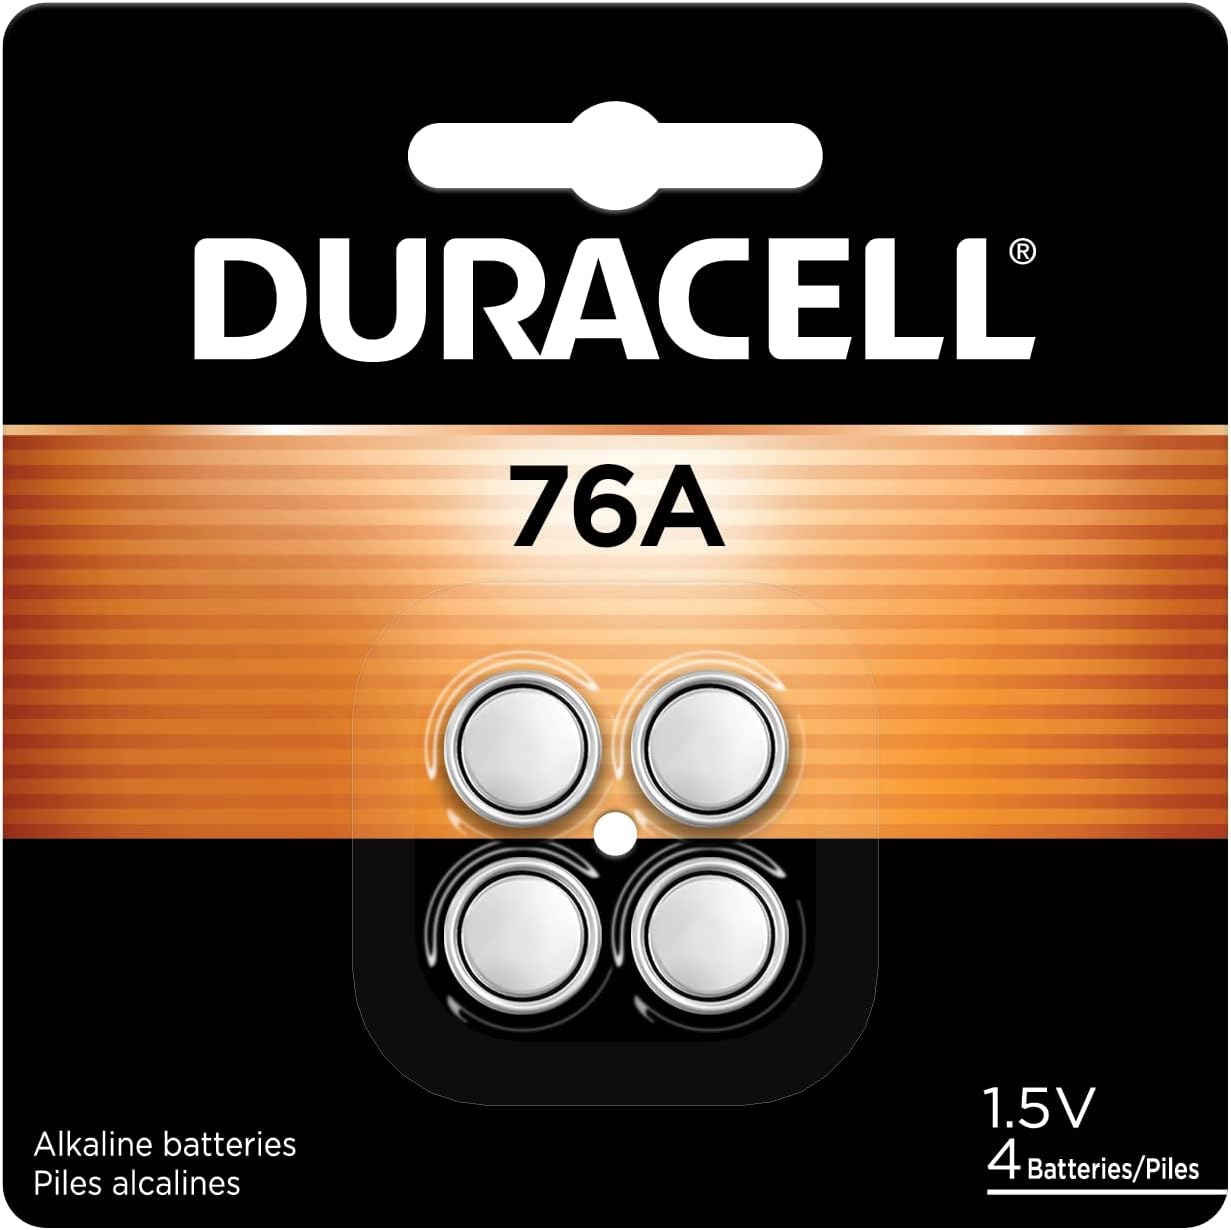 Amazon.com: Duracell 76A 1.5V Alkaline Battery, 4 Count Pack, 76A 1.5 Volt Alkaline Battery, Long-Lasting $3.29